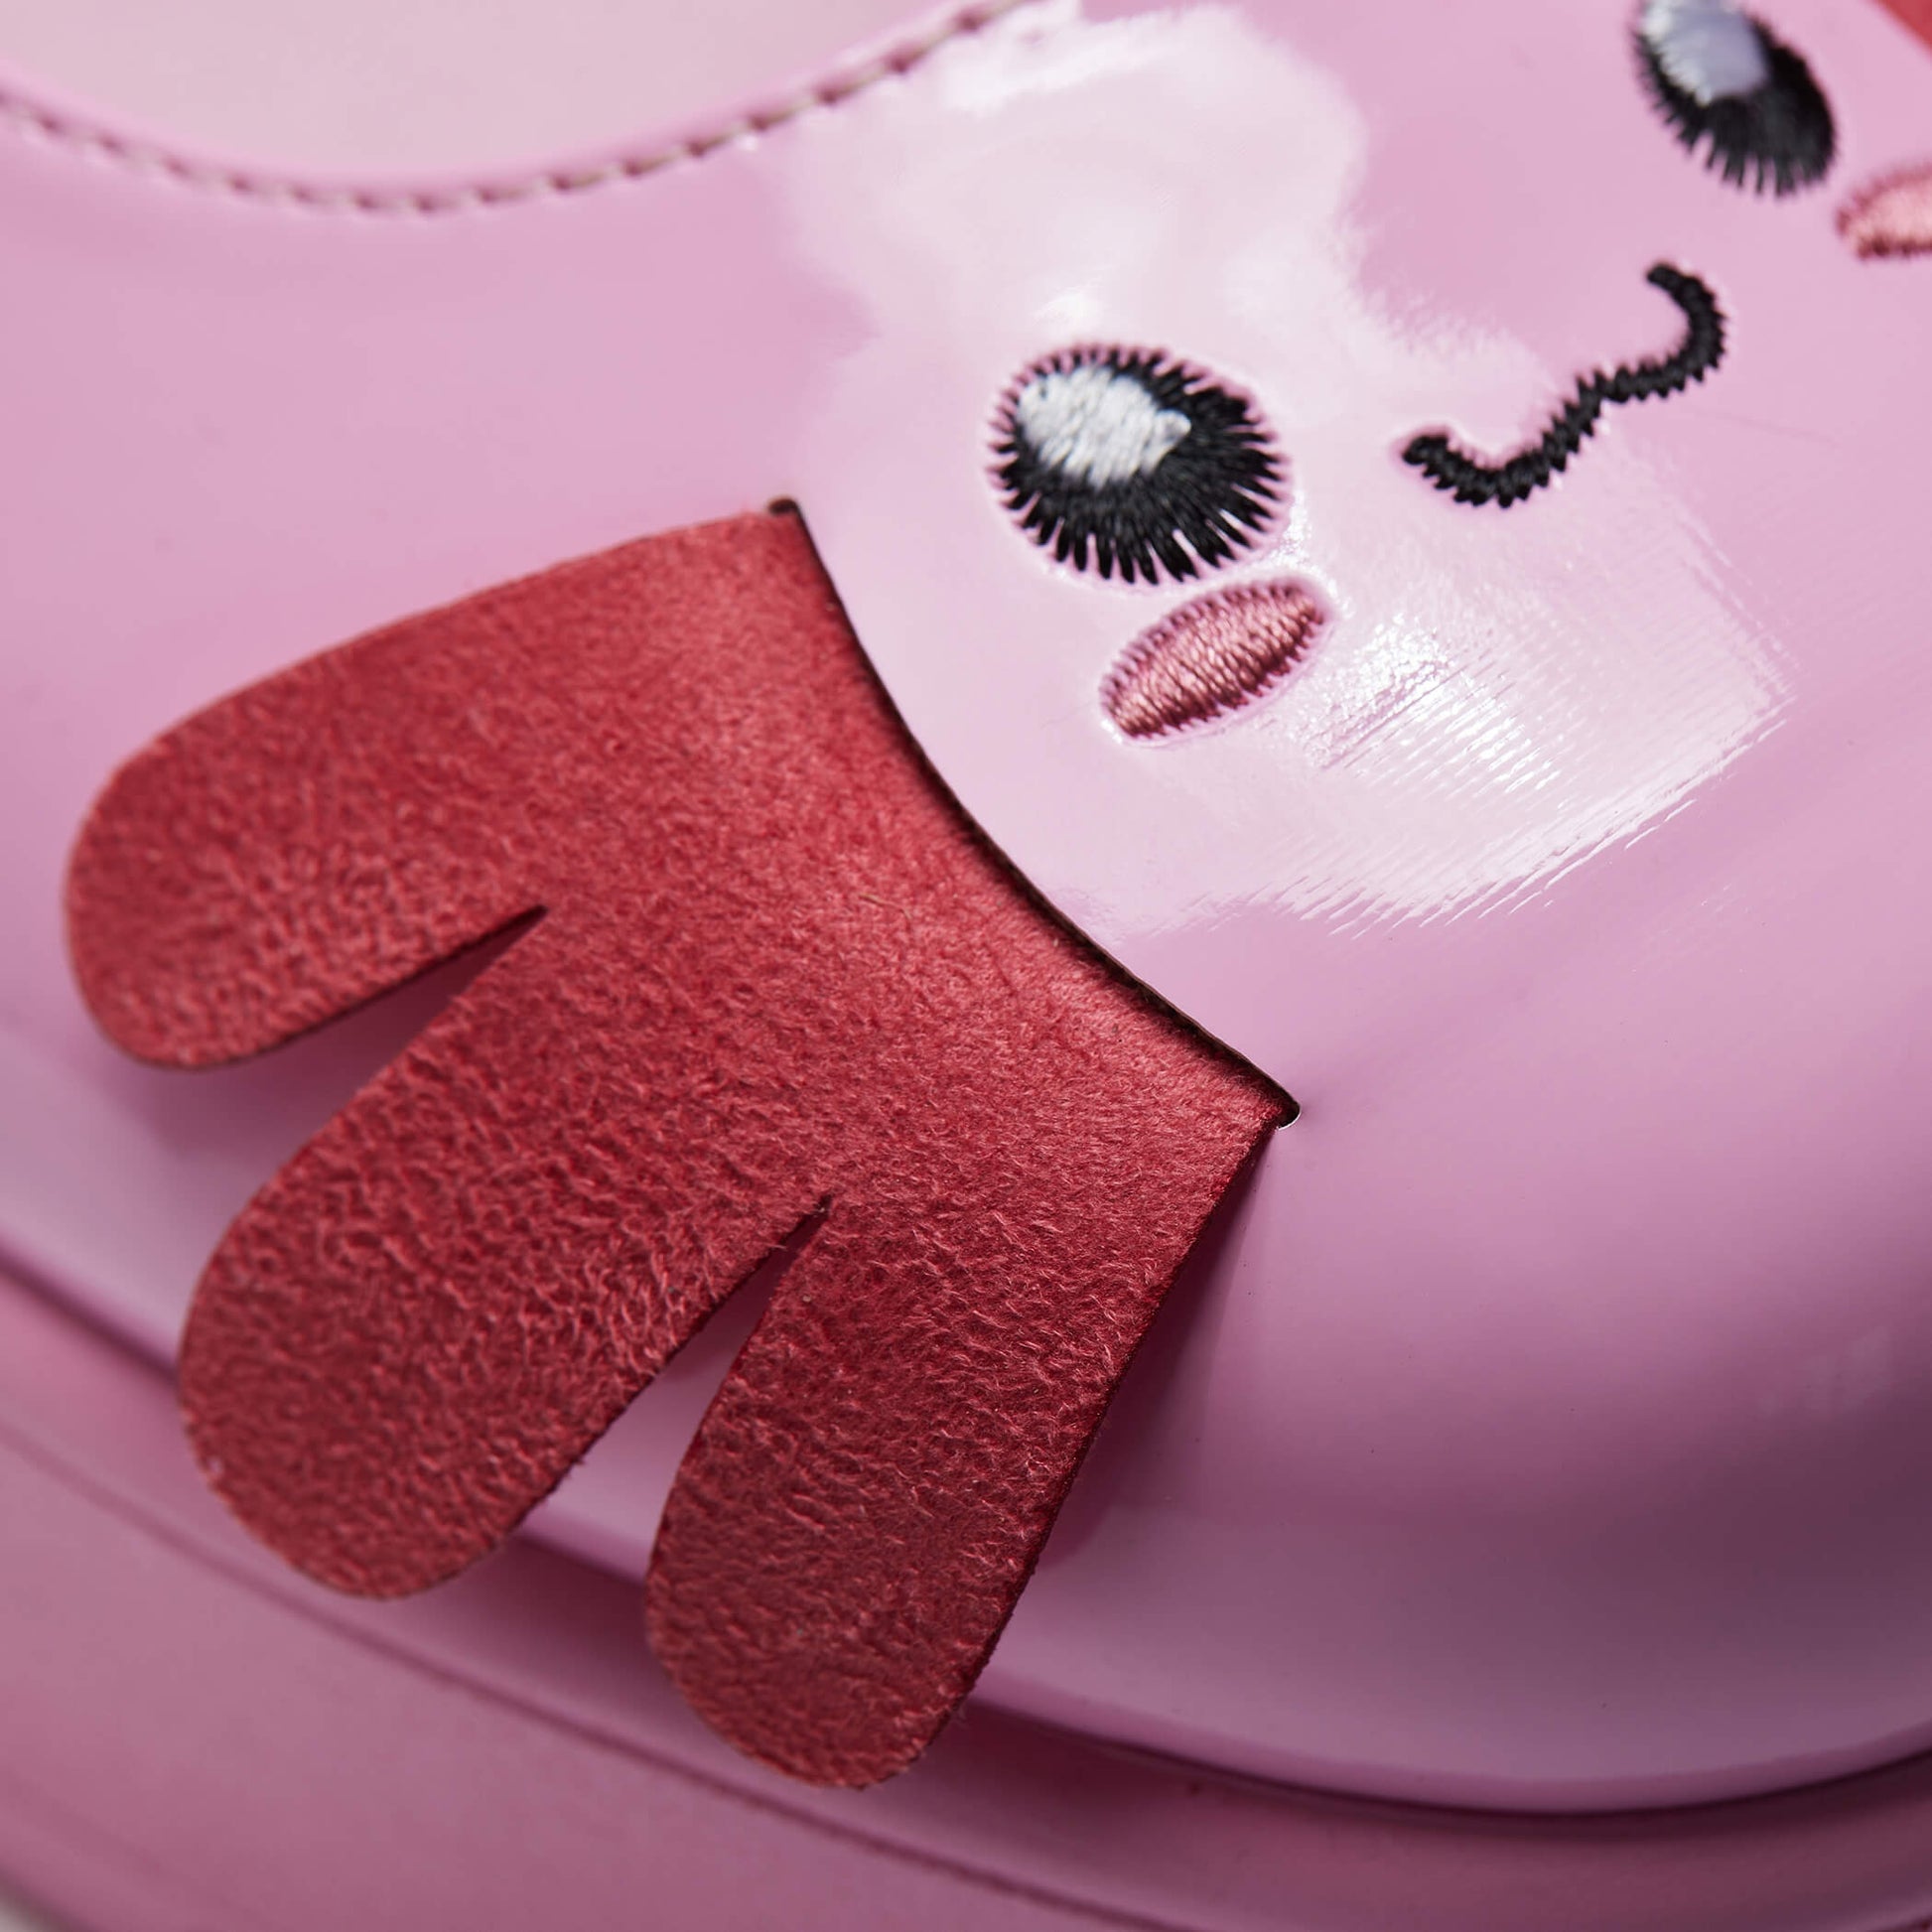 Tira Mary Jane Shoes 'Aztec Axolotl Edition' - Mary Janes - KOI Footwear - Pink - Details